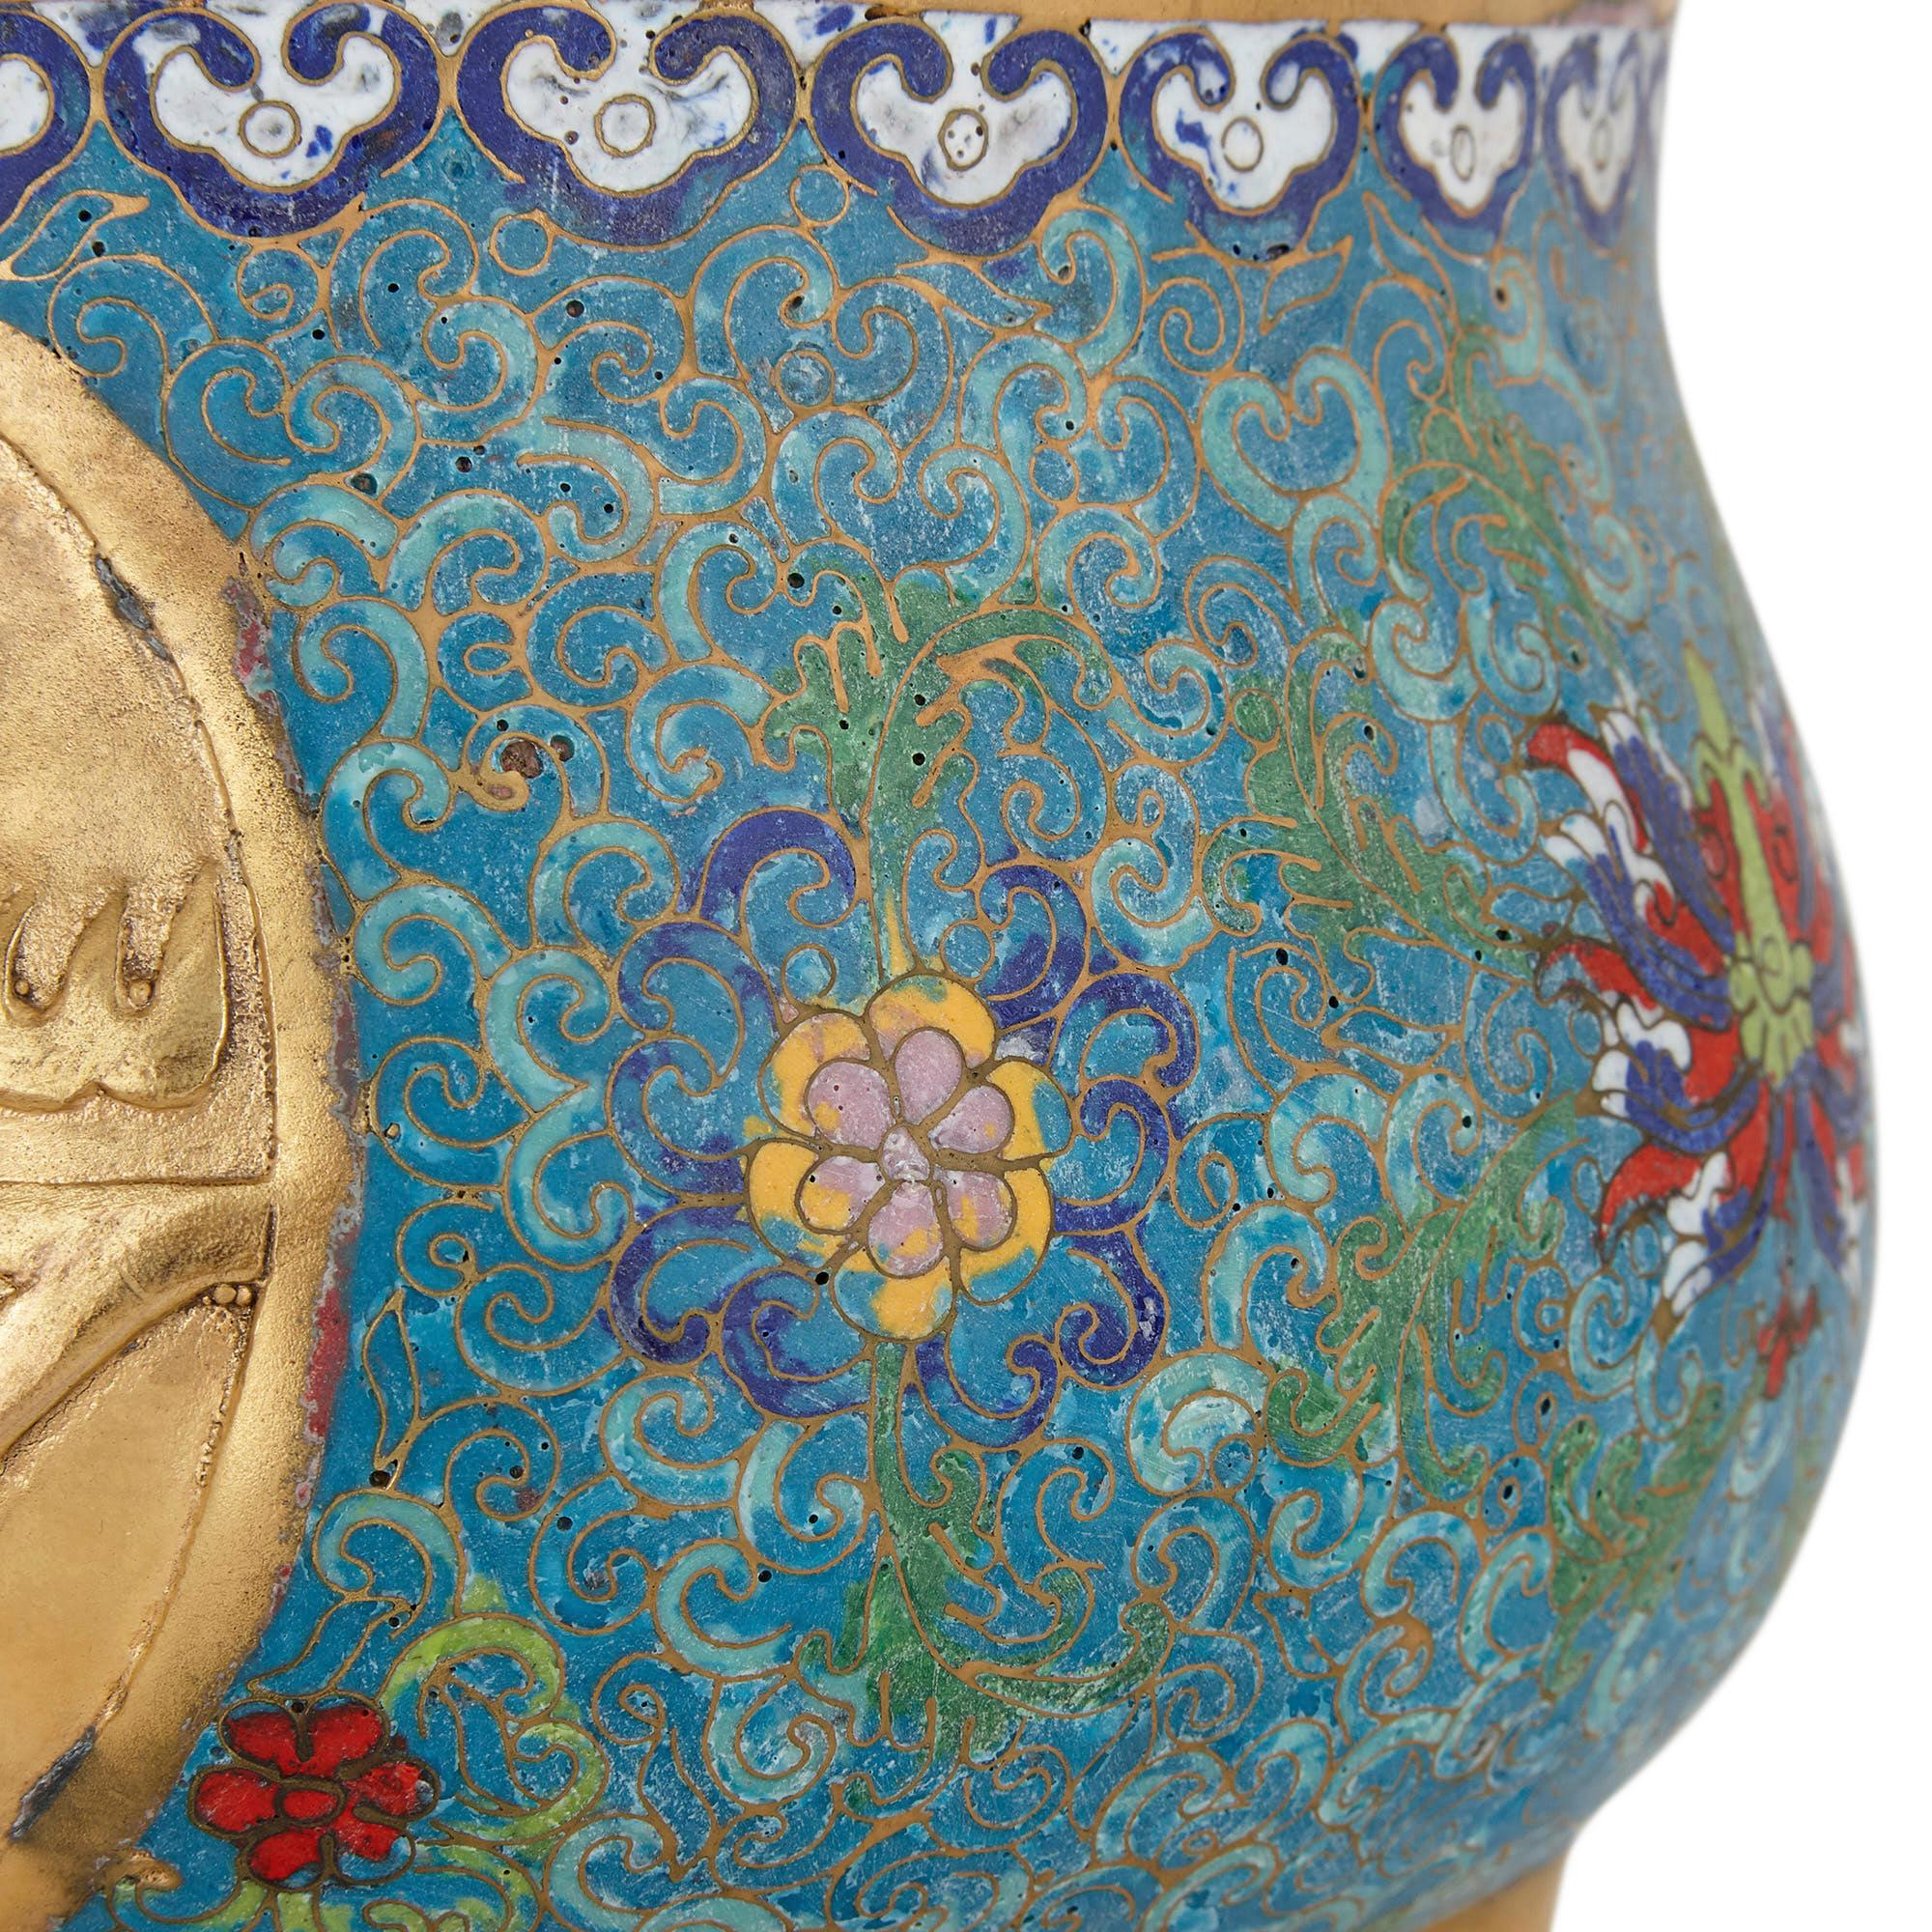 Cloissoné Chinese Floral Islamic Style Cloisonné Enamel and Ormolu Vase For Sale